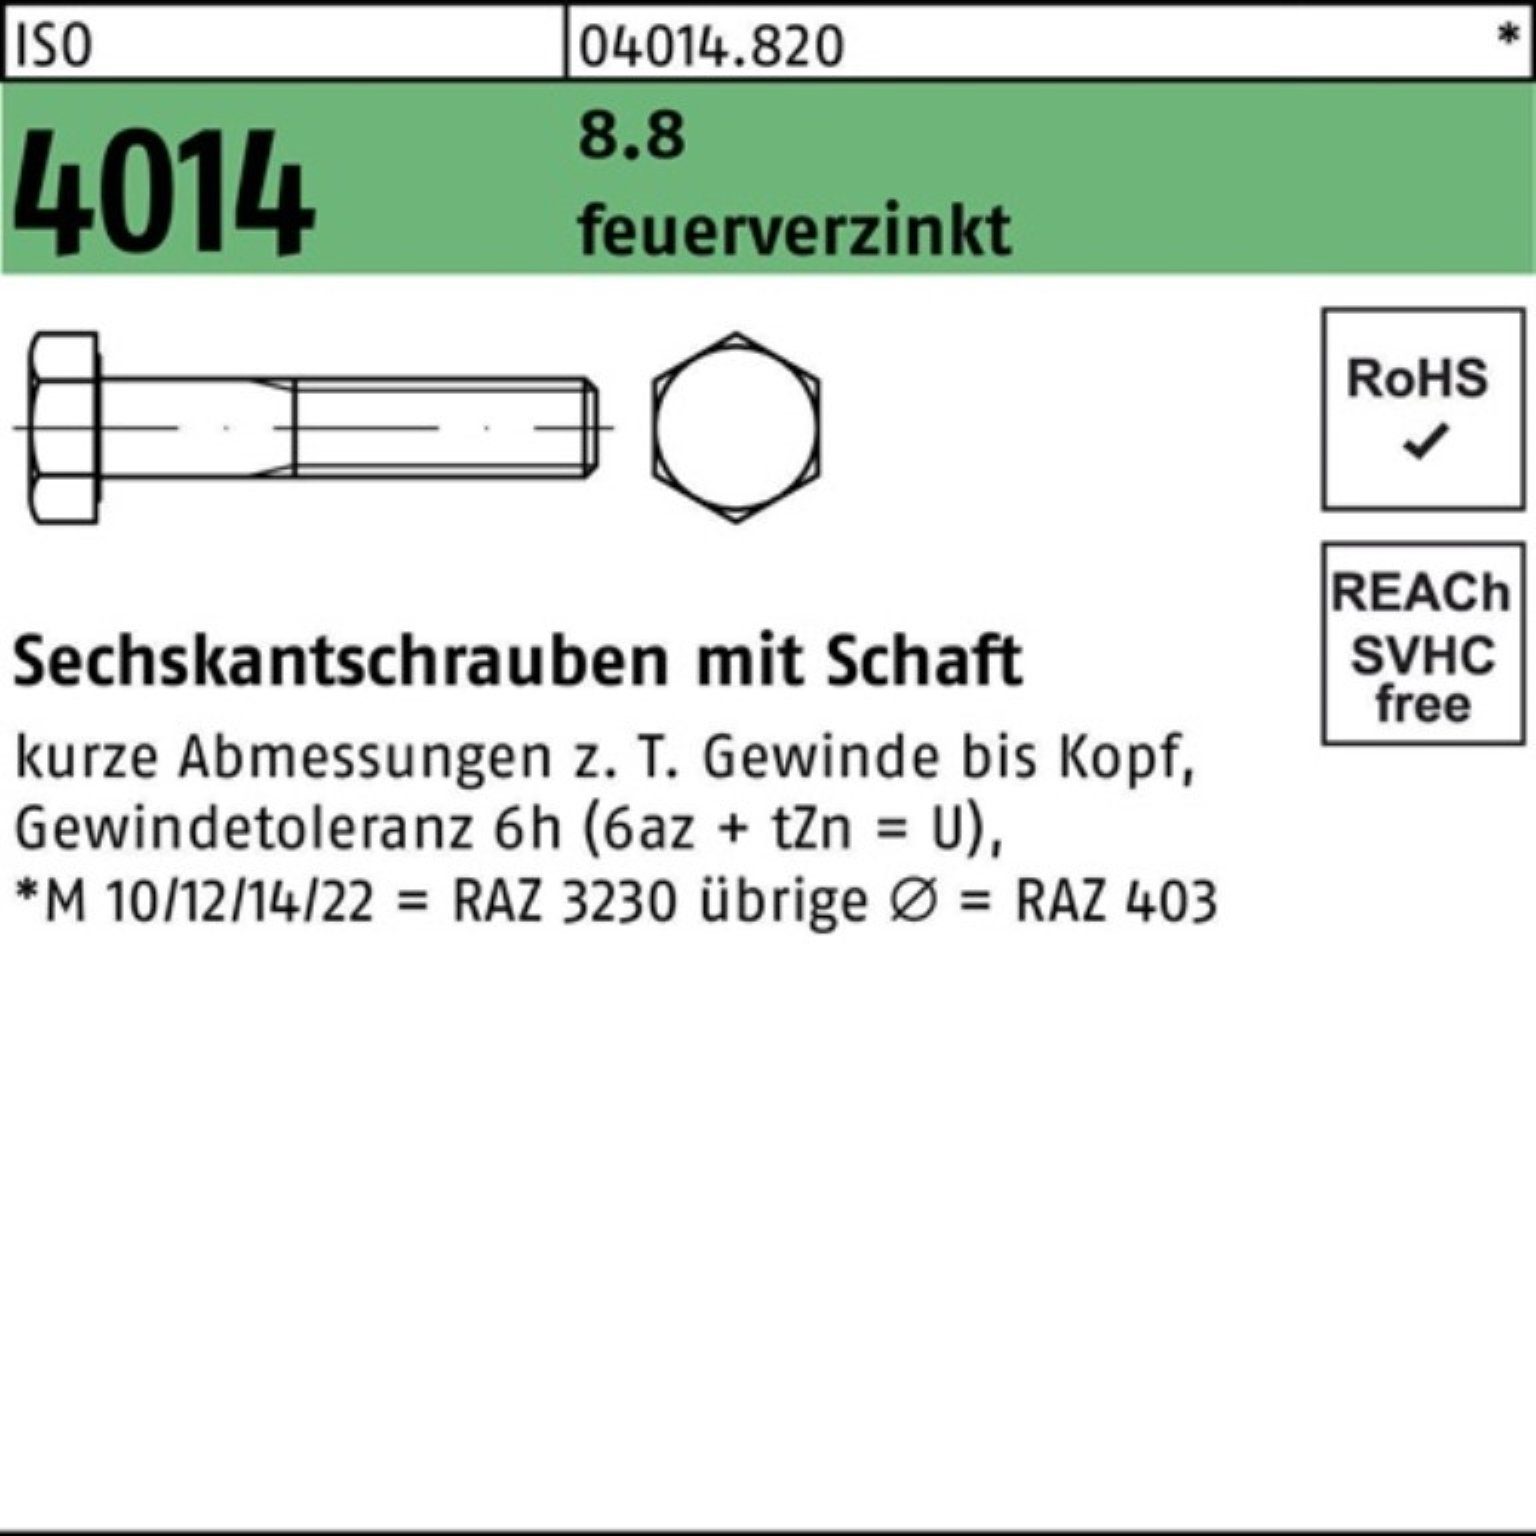 Bufab Sechskantschraube 100er Pack Sechskantschraube ISO 4014 Schaft M24x 75 8.8 feuerverz. 25 | Schrauben